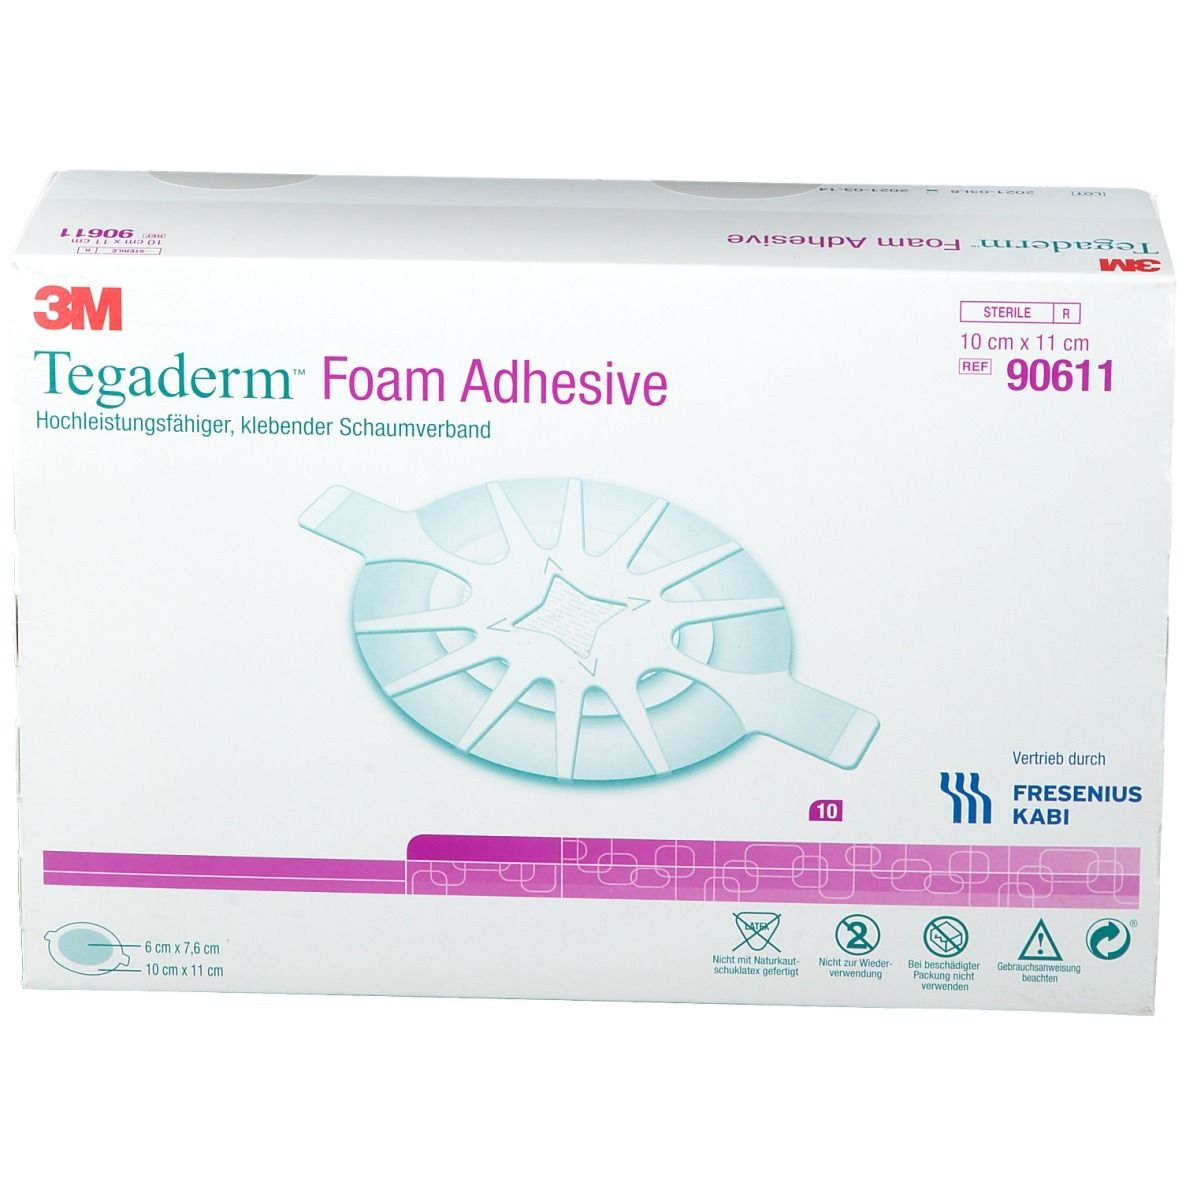 Tegaderm Foam Adhesive 10 x 11 cm oval